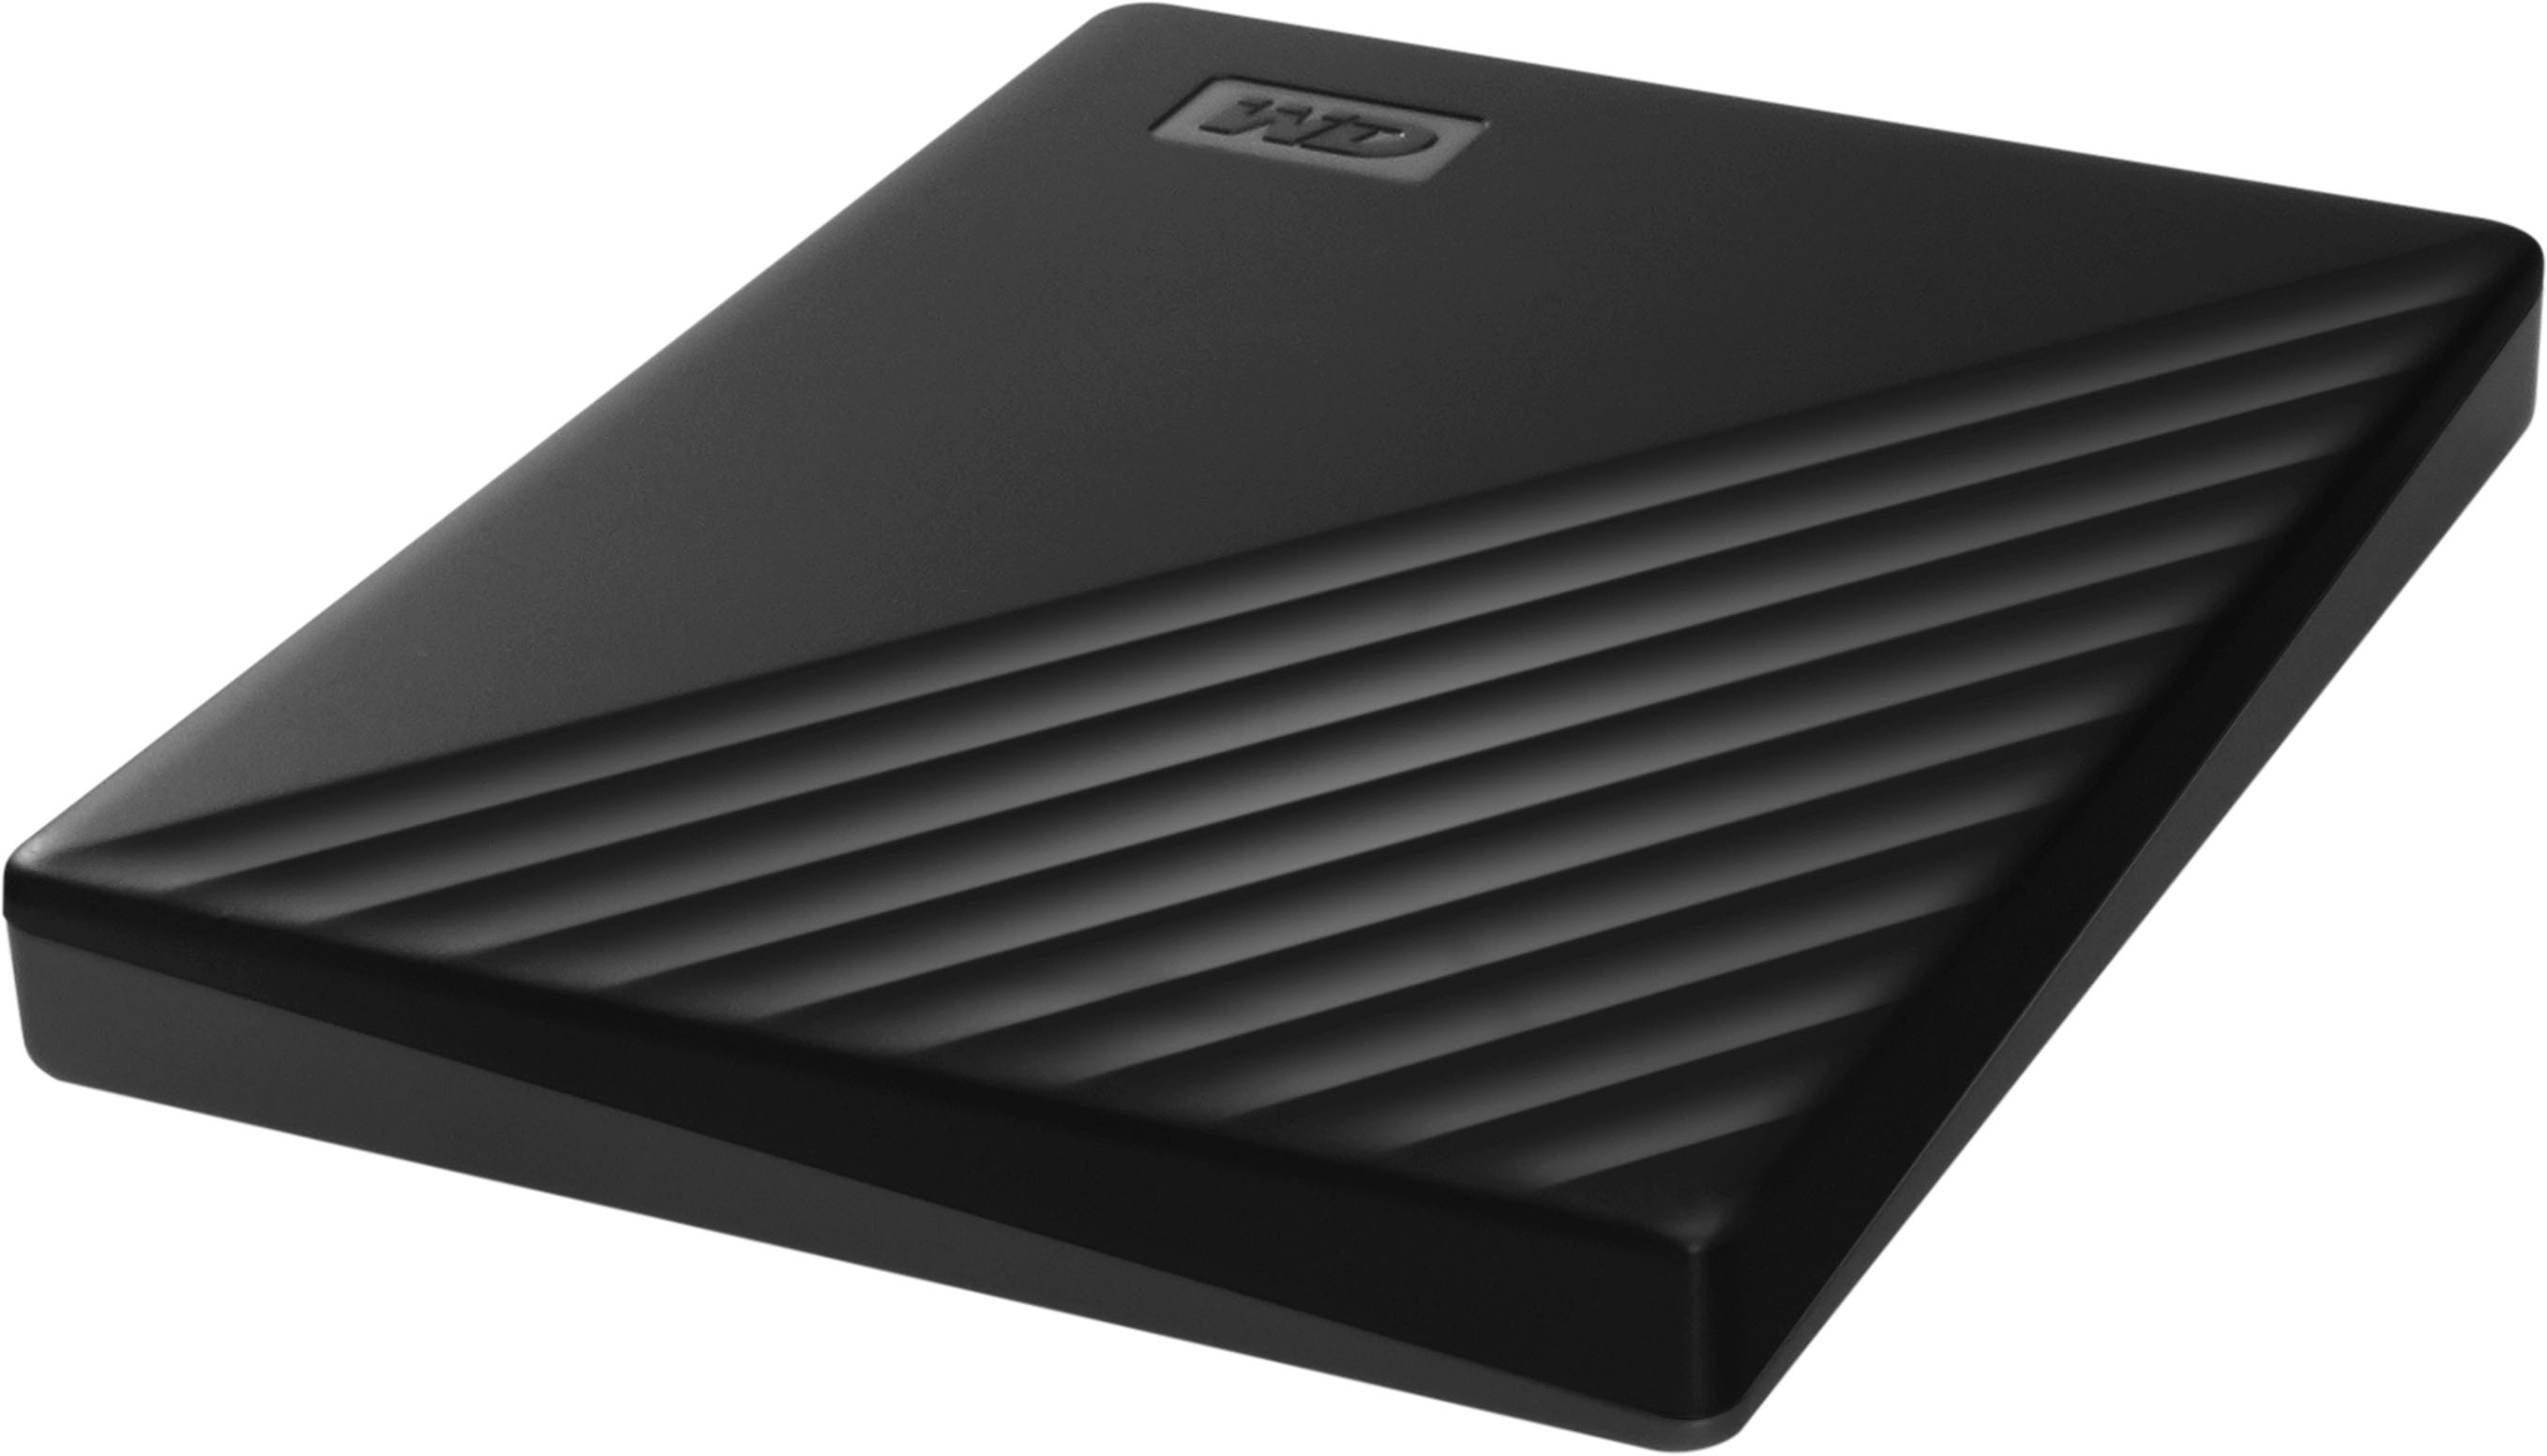 Buy WDBYVG0020BBK-WESN 3.0 External Best - Hard My 2TB WD Black Portable Drive Passport USB